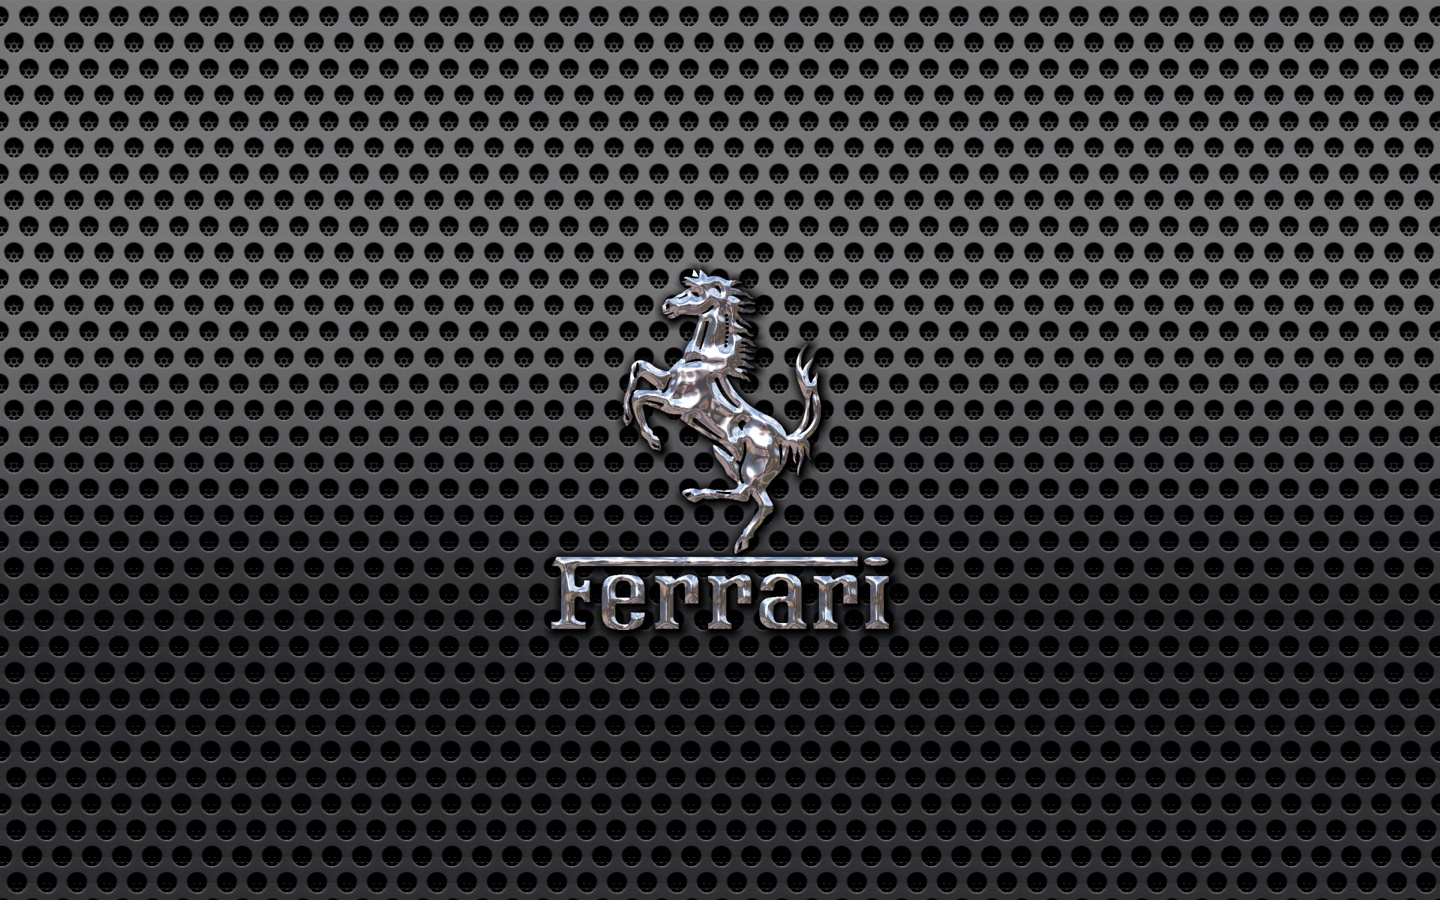 Ferrari Prancing Horse Of Maranello Logo On A Black Metal Mesh